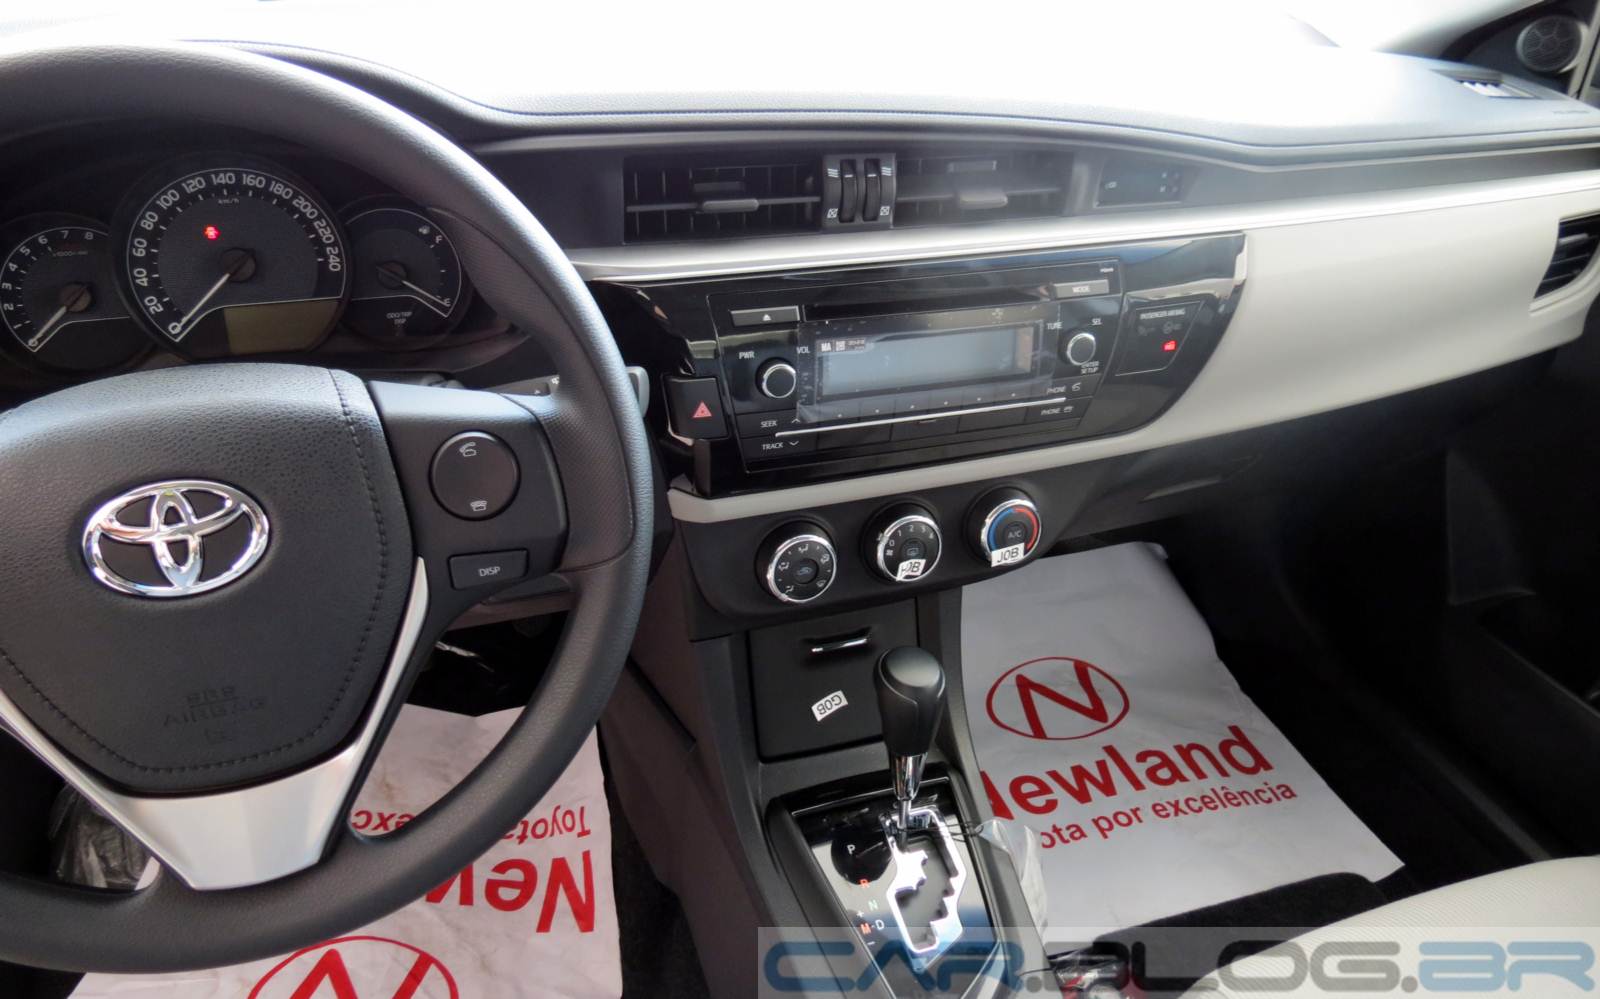 Novo Toyota Corolla 2015 - interior - painel